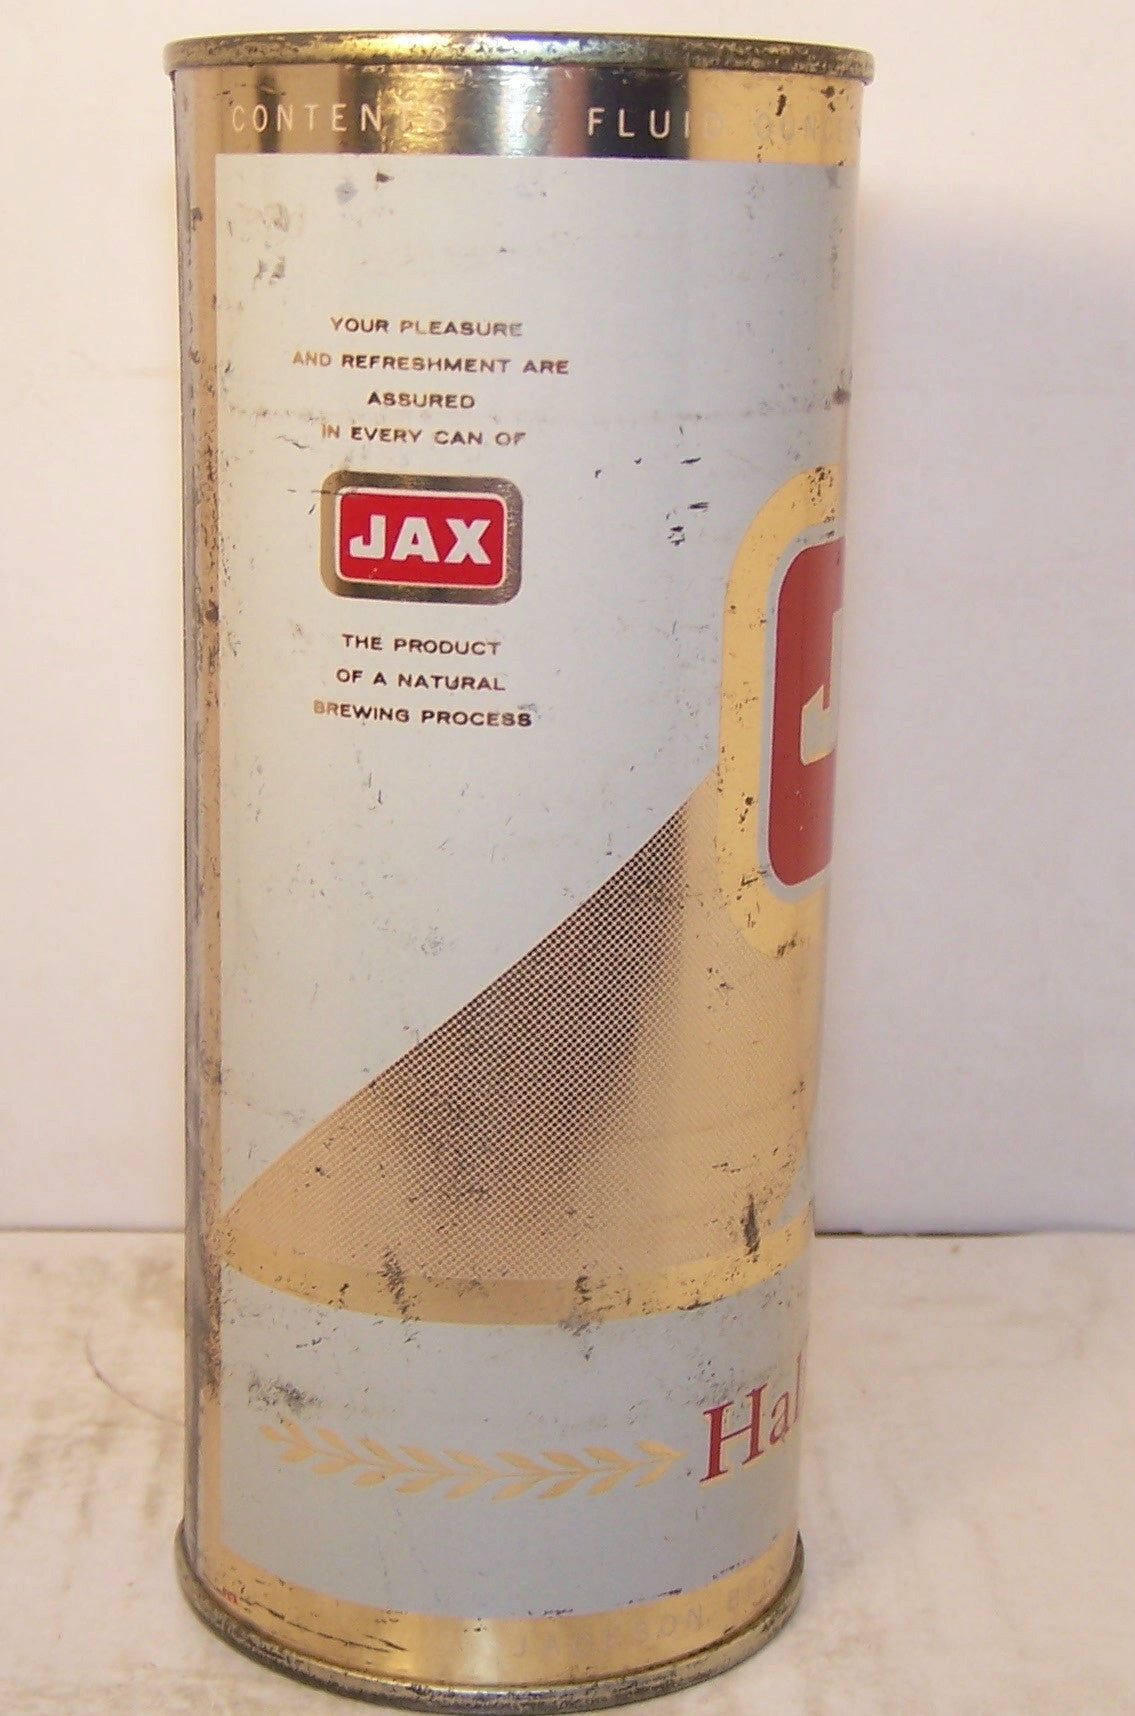 Jax Beer, USBC 231-8, Grade 1- Sold on 12/01/16